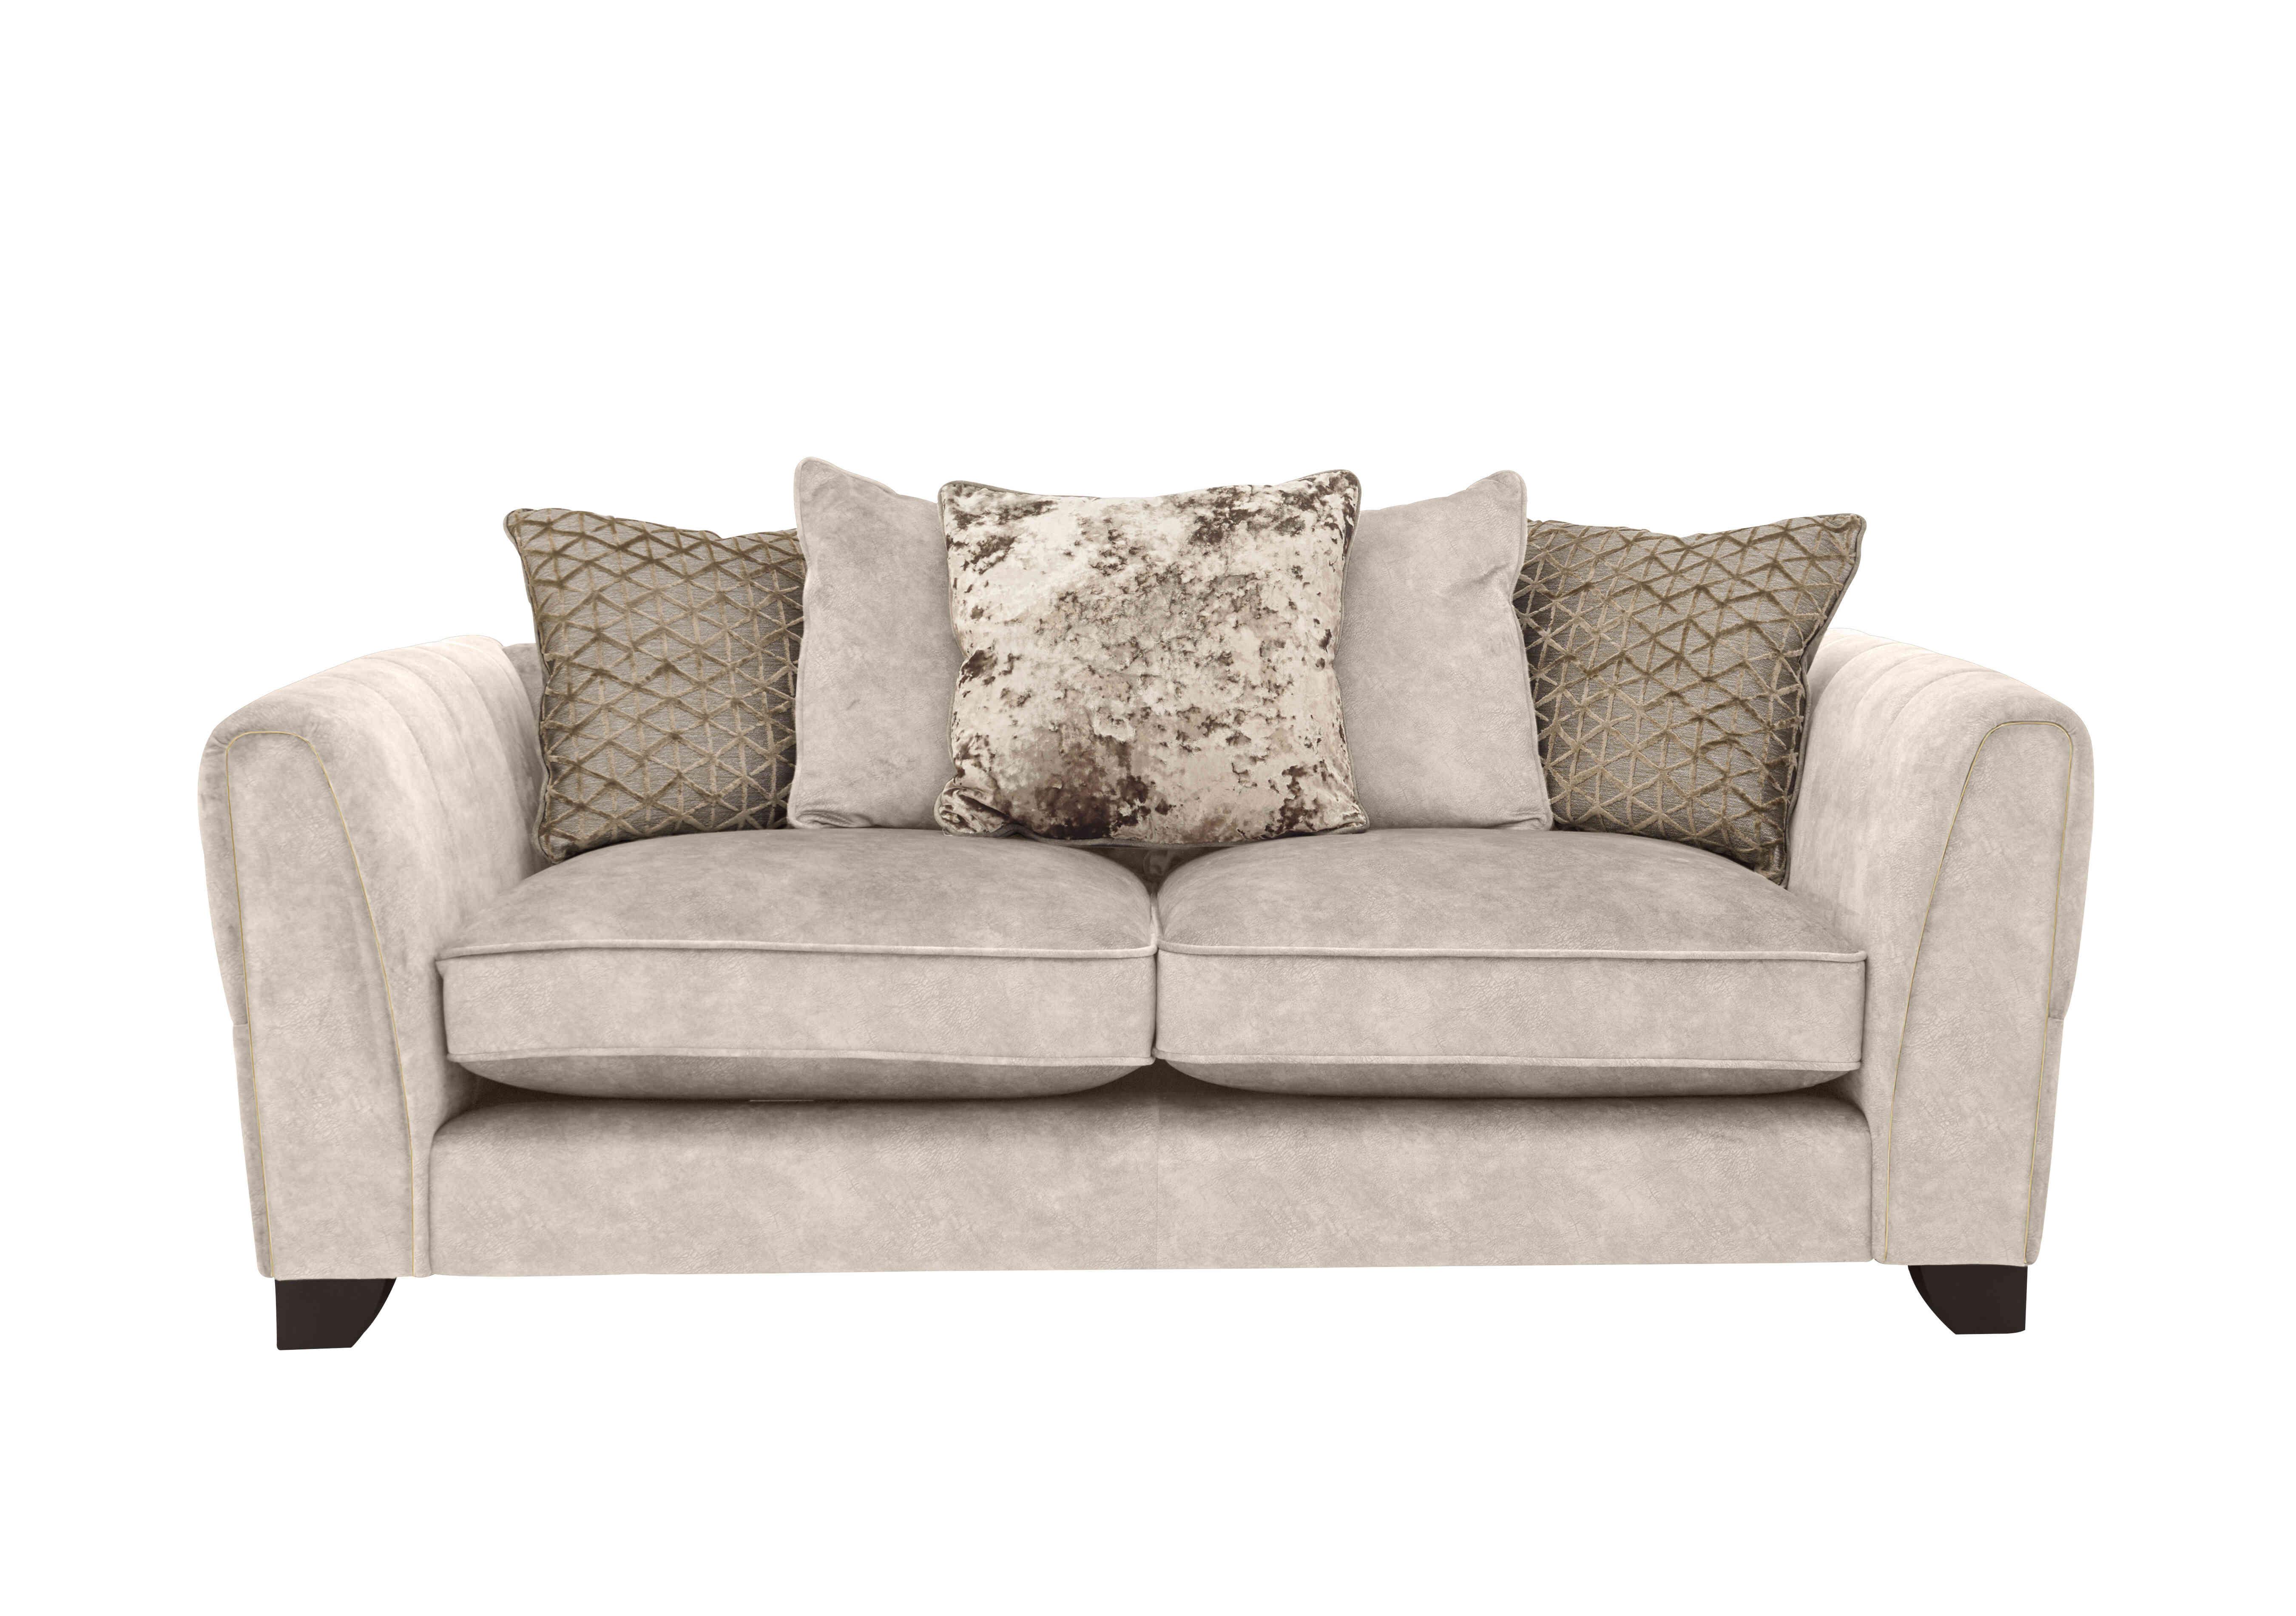 Ariana 3 Seater Fabric Pillow Back Sofa in Dapple Cream Brass Insert on Furniture Village